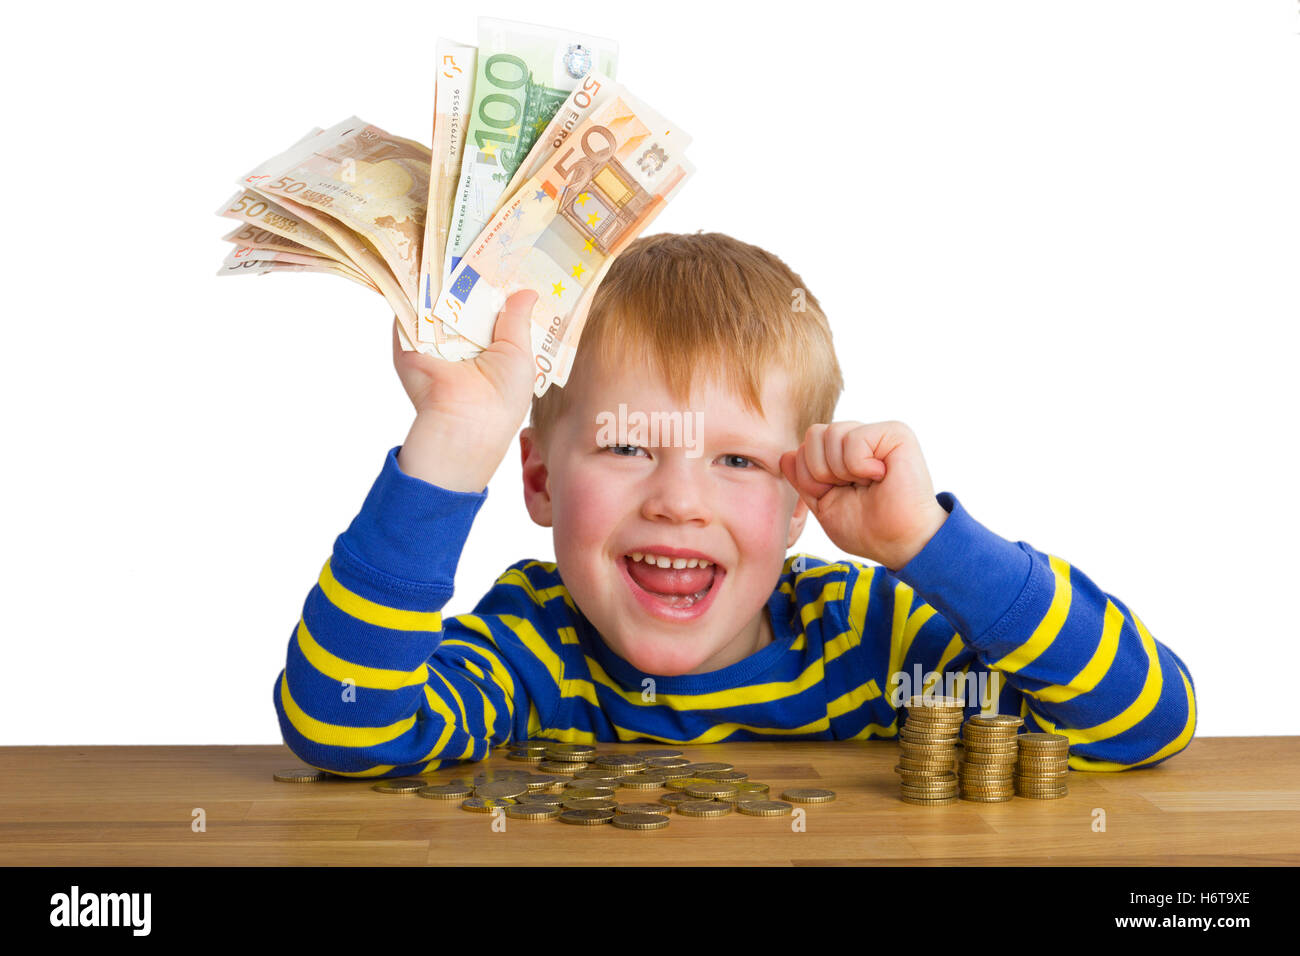 jubilant boy with money Stock Photo